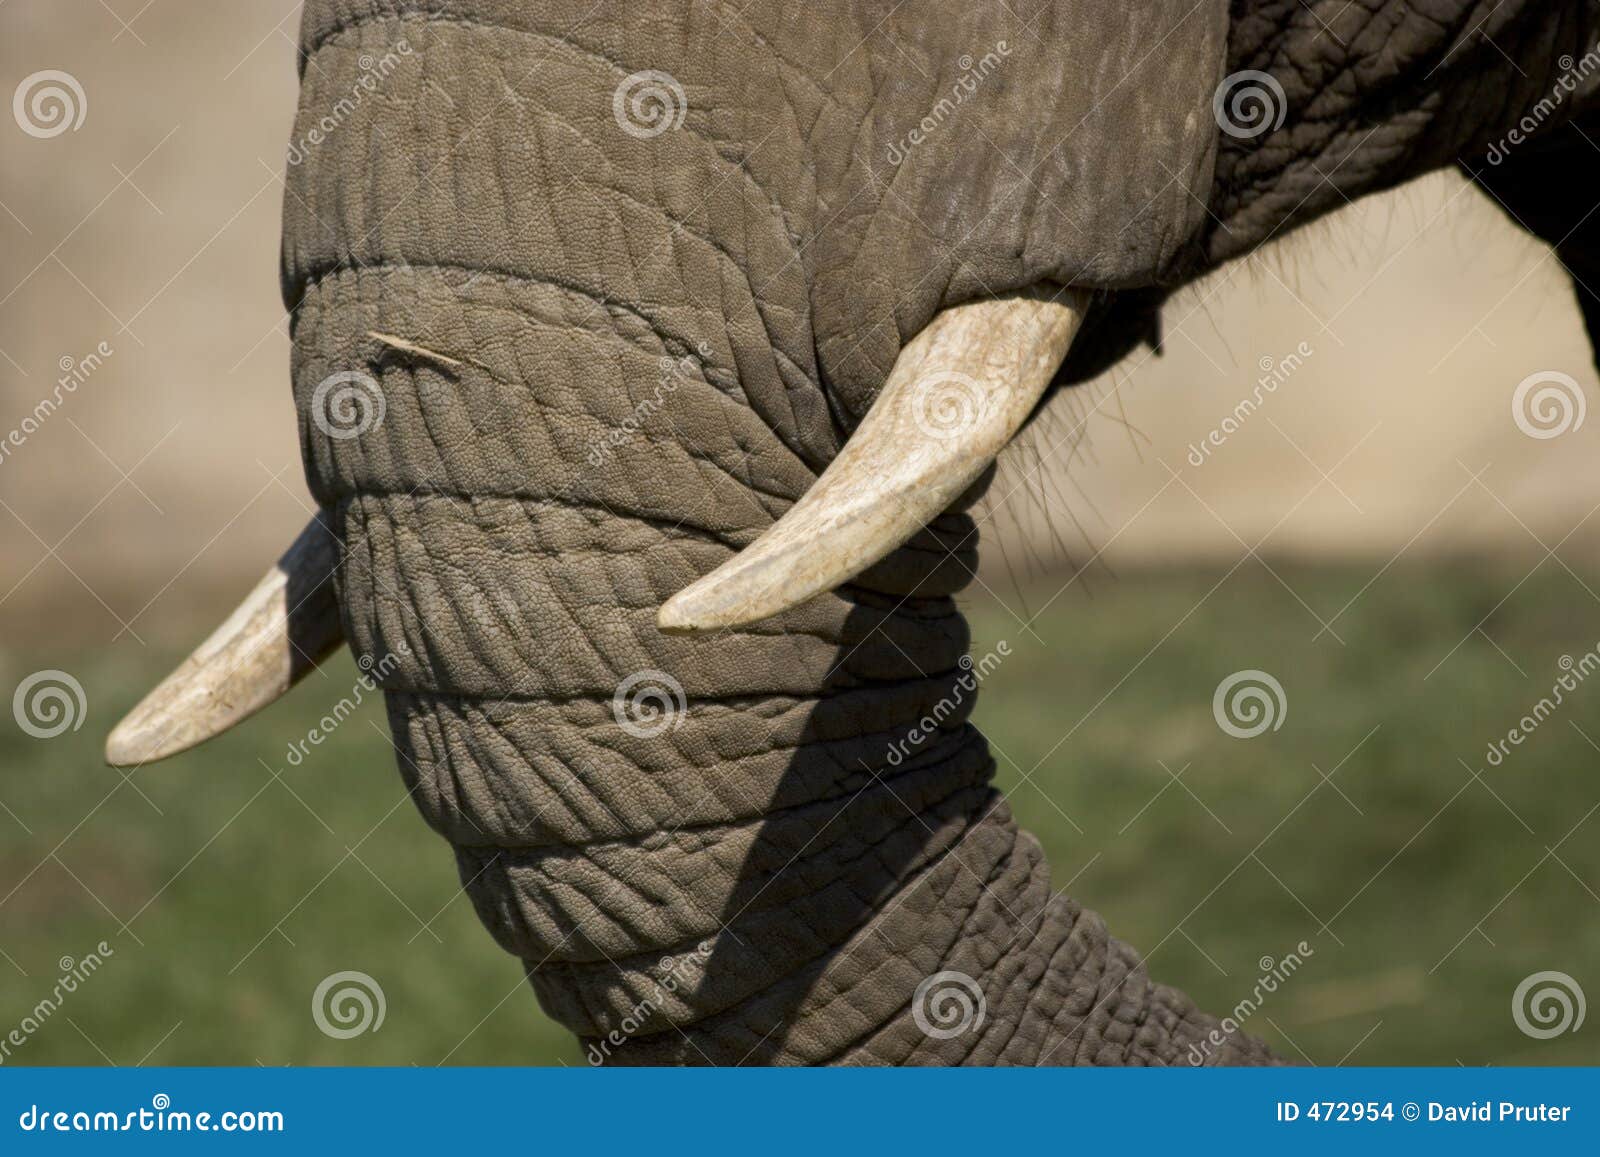 839 Elephant Nose Tusks Stock Photos - Free & Royalty-Free Stock